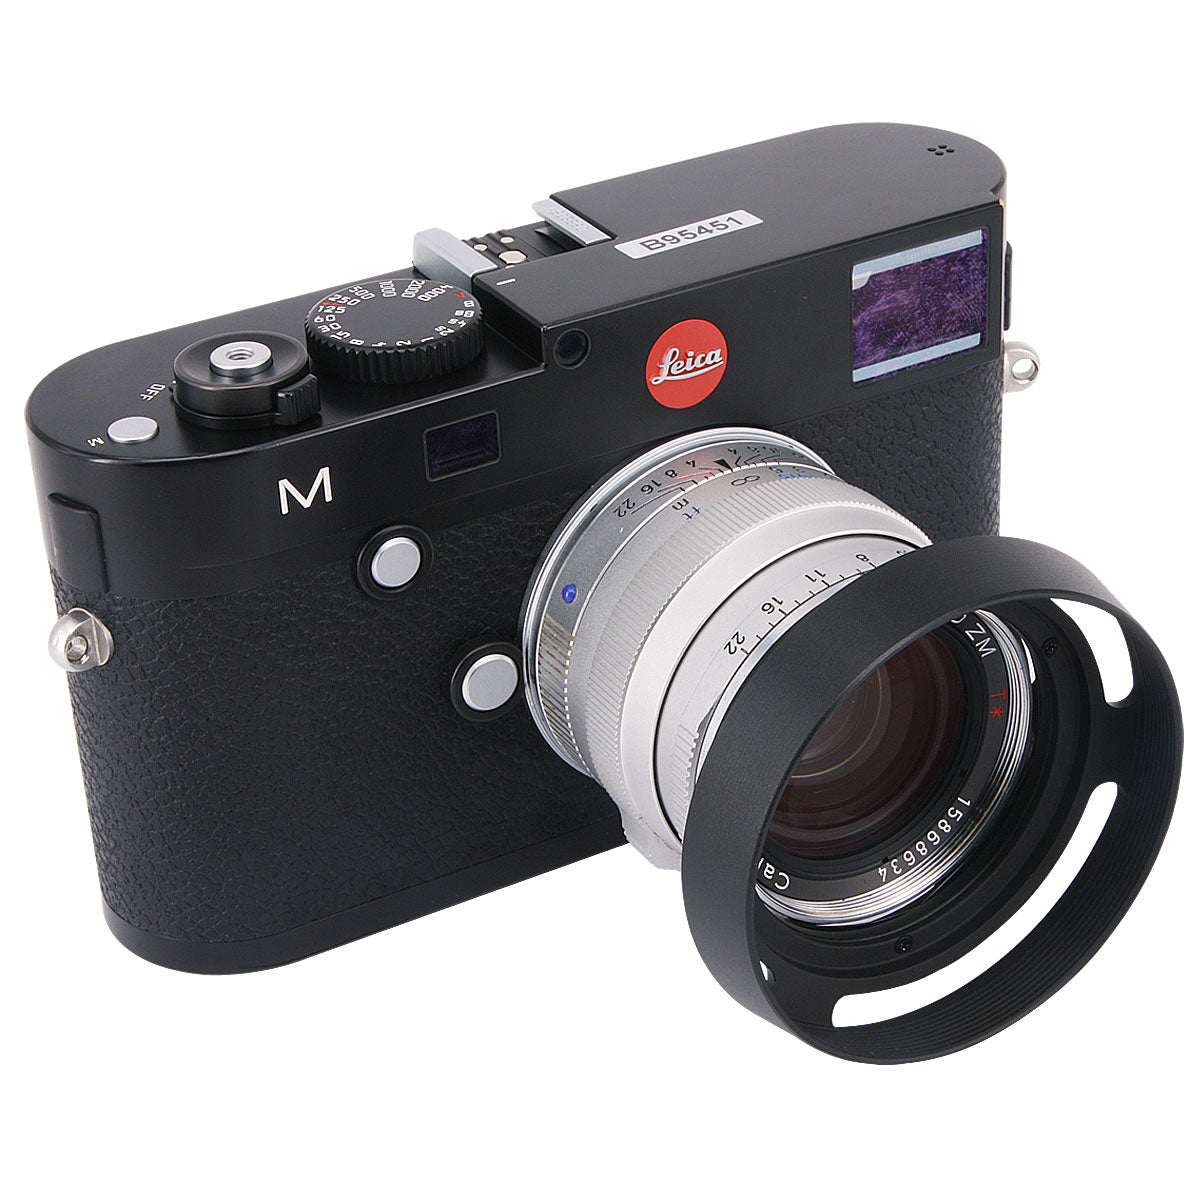 Haoge LH-ZV09 Round Metal Lens Hood for Carl Zeiss C Biogon T* 4.5/21 21mm f4.5 ZM, 2.8/25 25mm f2.8 ZM, 2.8/28 28mm f2.8 ZM, C Sonnar T* 1.5/50 50mm f1.5 ZM Lens